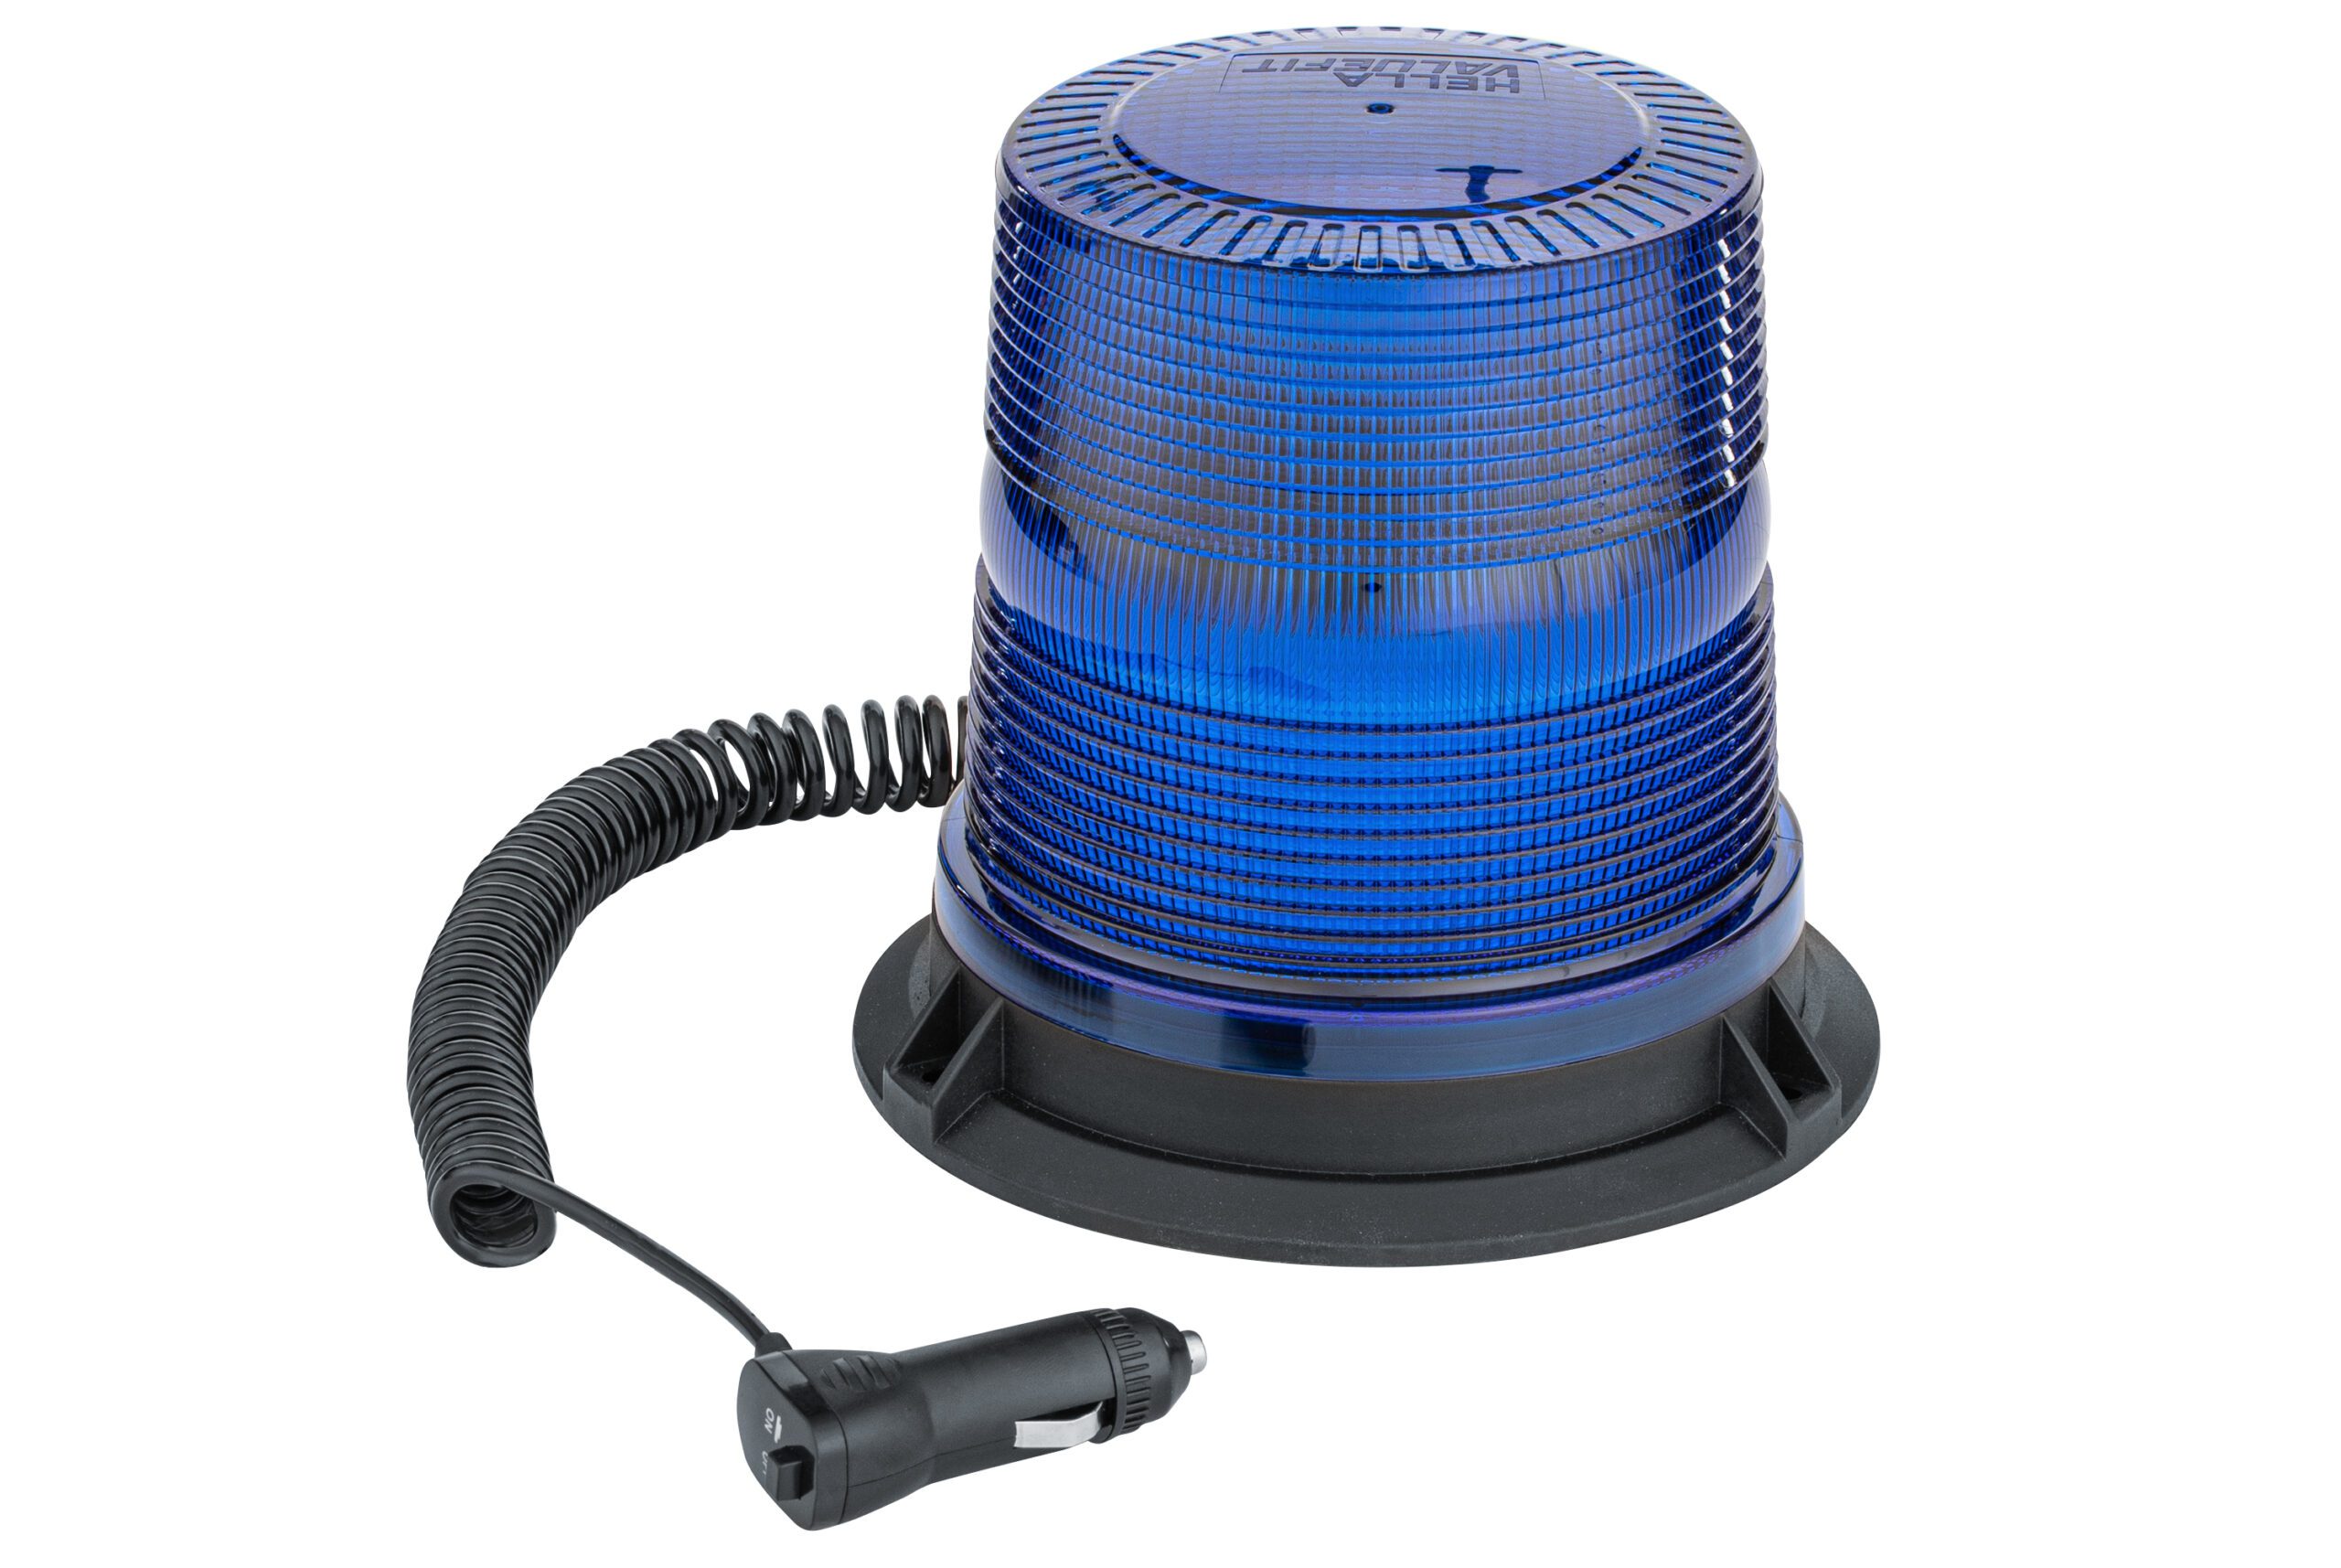 Blue flash led beacon ECE R65